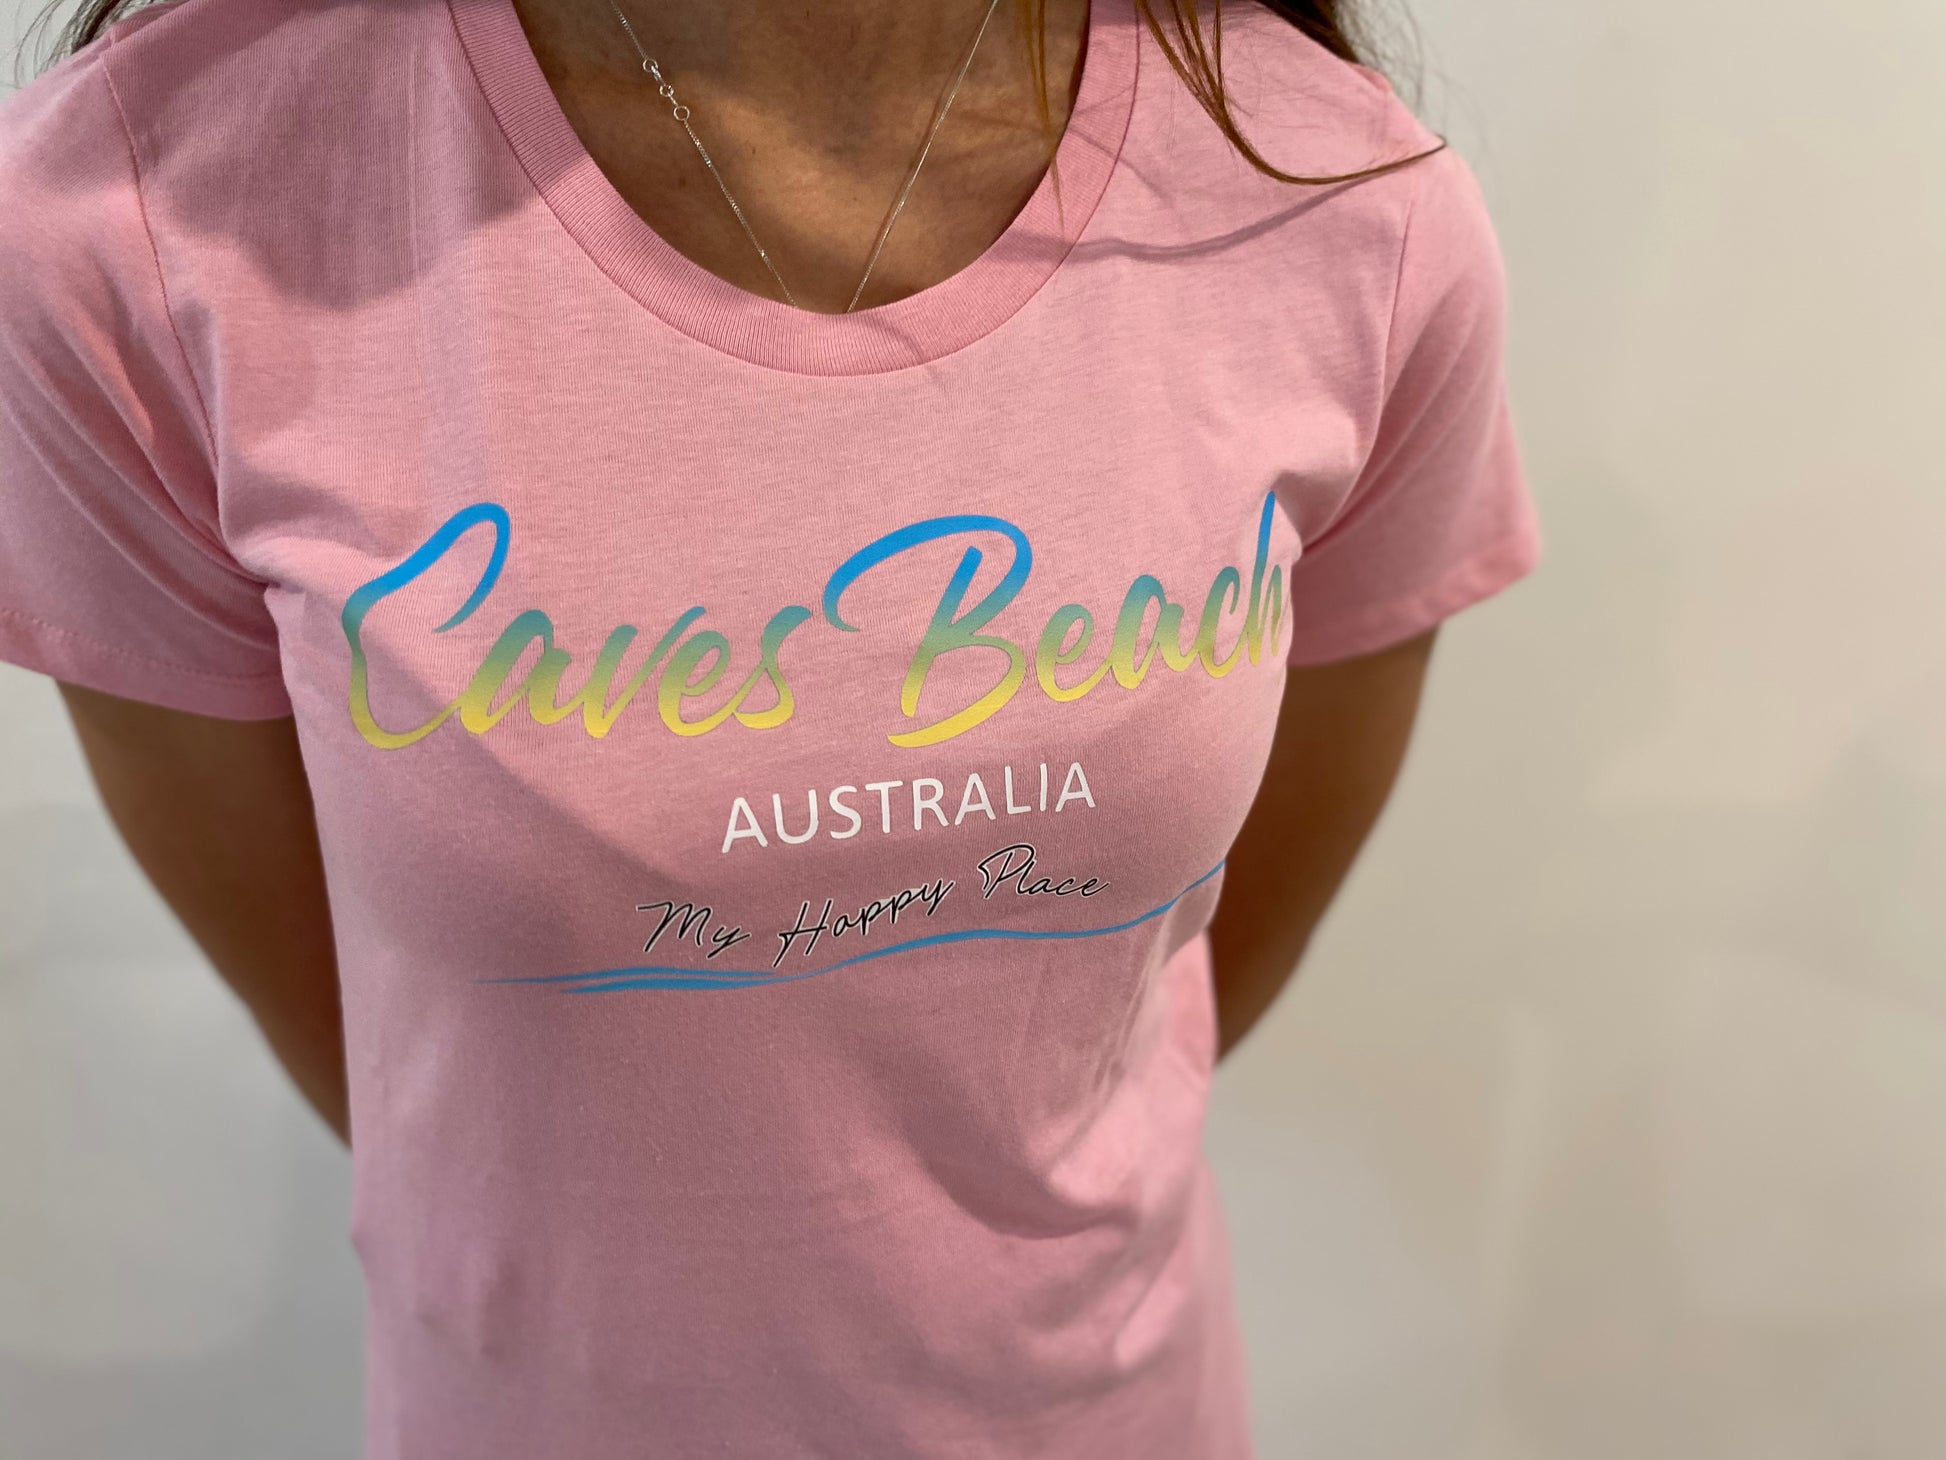 Caves beach australia Printed T-shirt my happy place